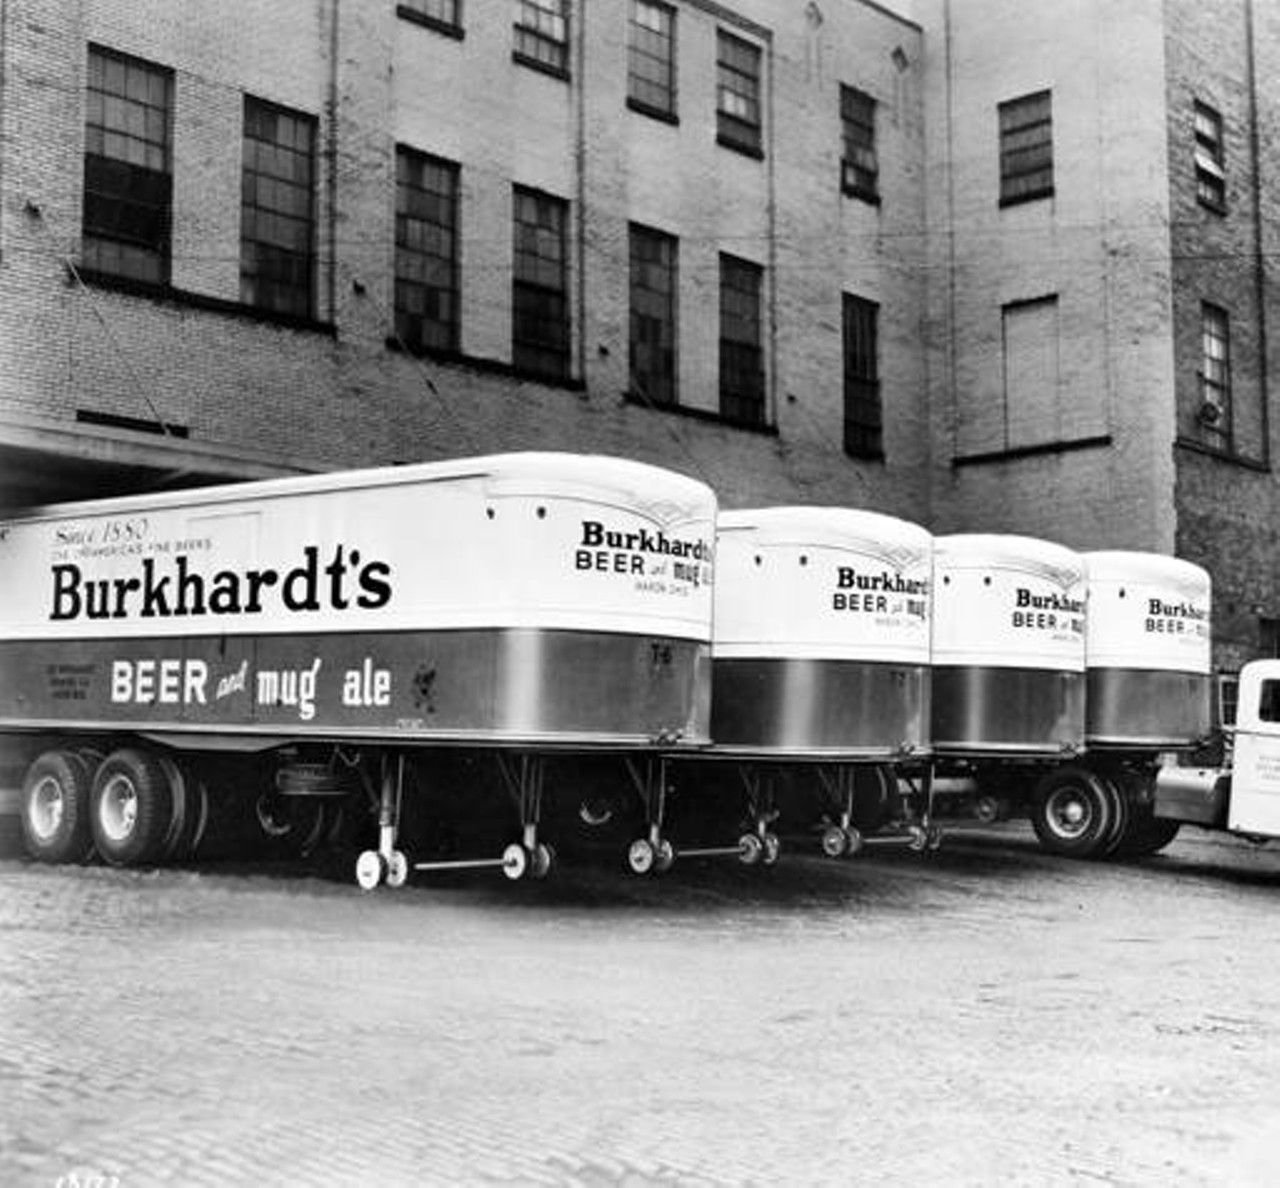 Burkhardt's Beer Company trailers in Akron in 1946.